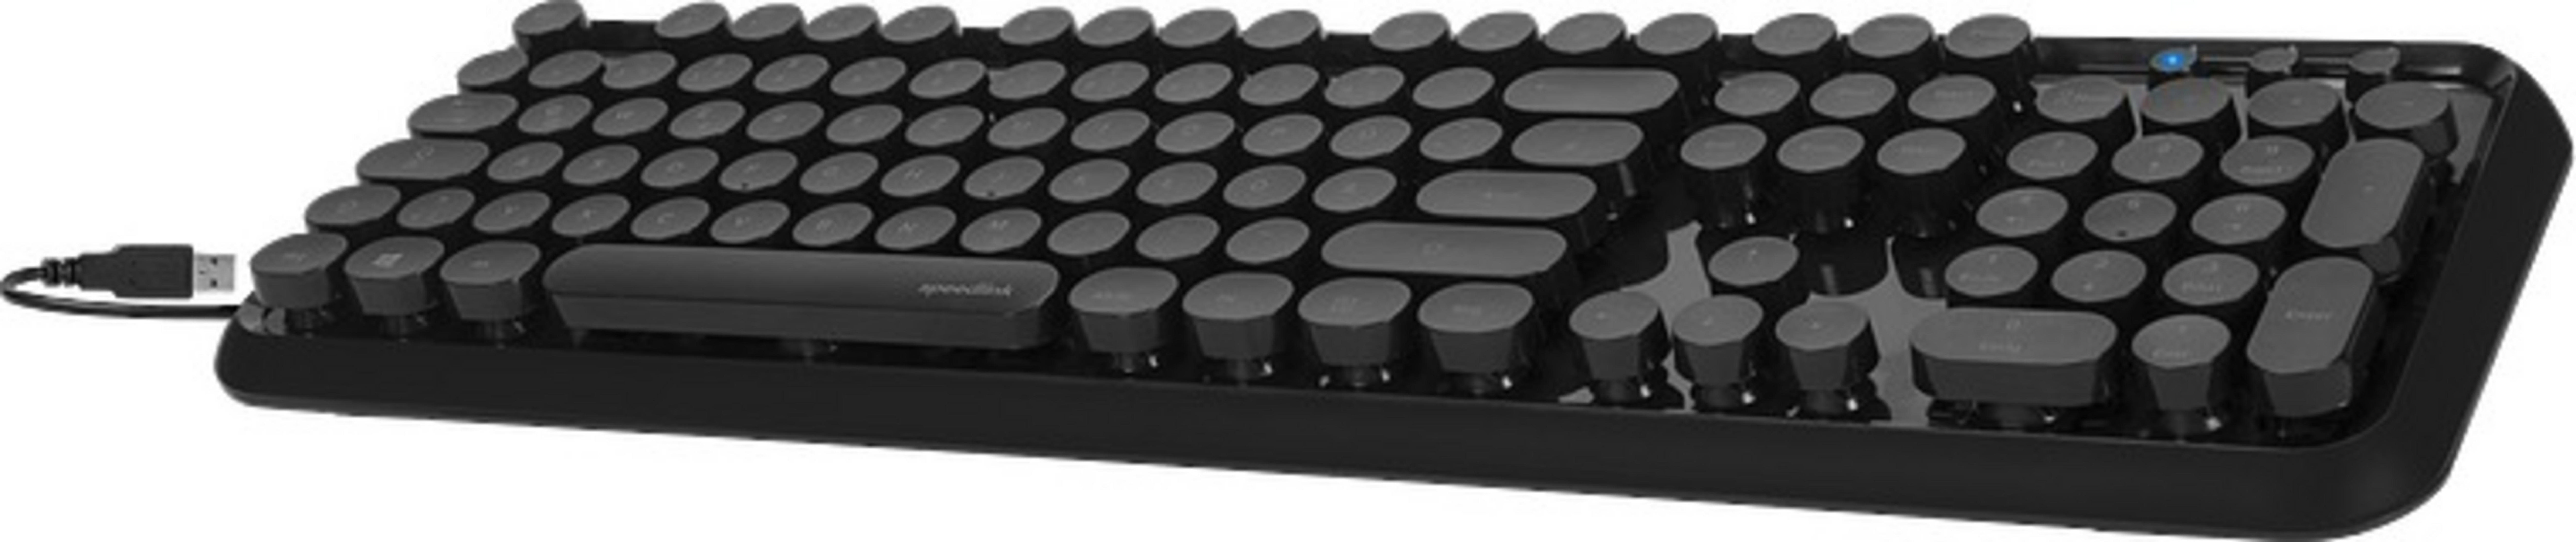 SPEEDLINK BLACK, RETRO Tastatur CIRCLE SL-640004-BK